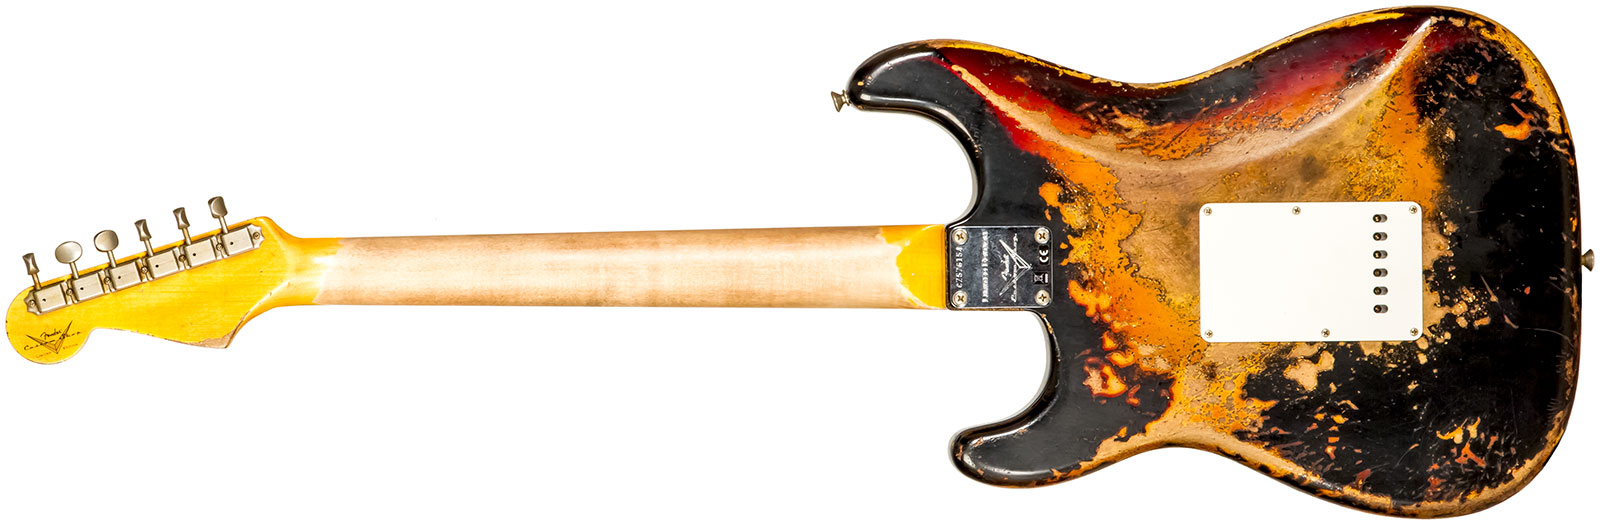 Fender Custom Shop Strat 1959 3s Trem Rw #cz576154 - Super Heavy Relic Black O. 3-color Sunburst - E-Gitarre in Str-Form - Variation 1